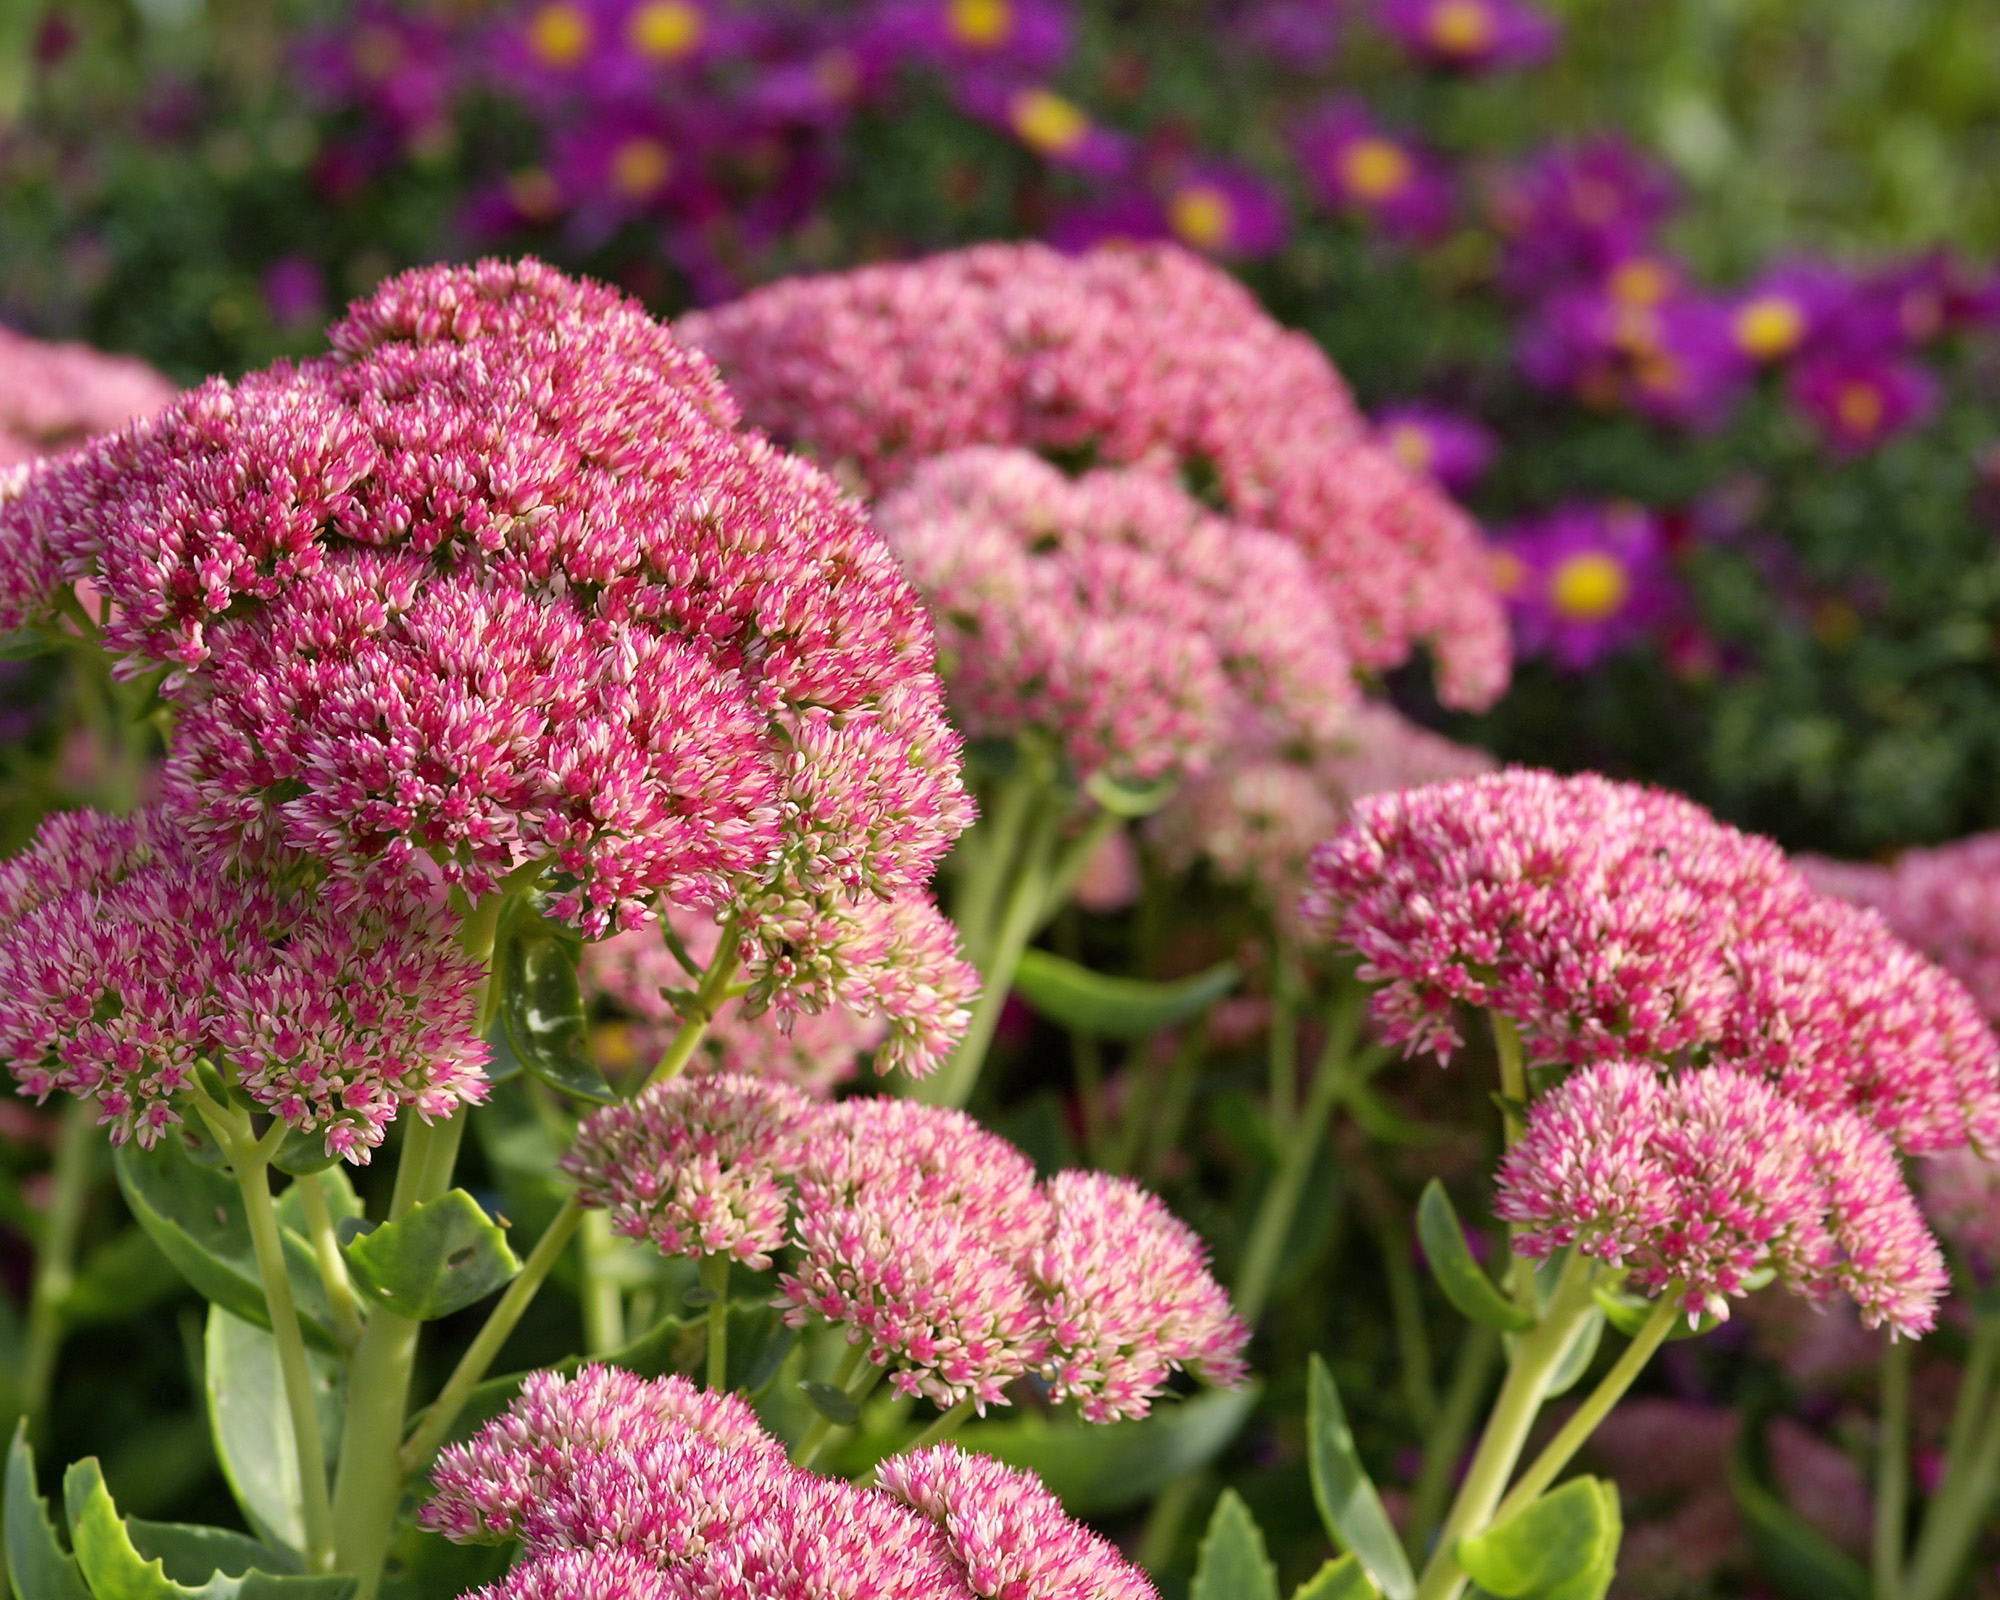 Deep pink flowerheads of stonecrop or sedum